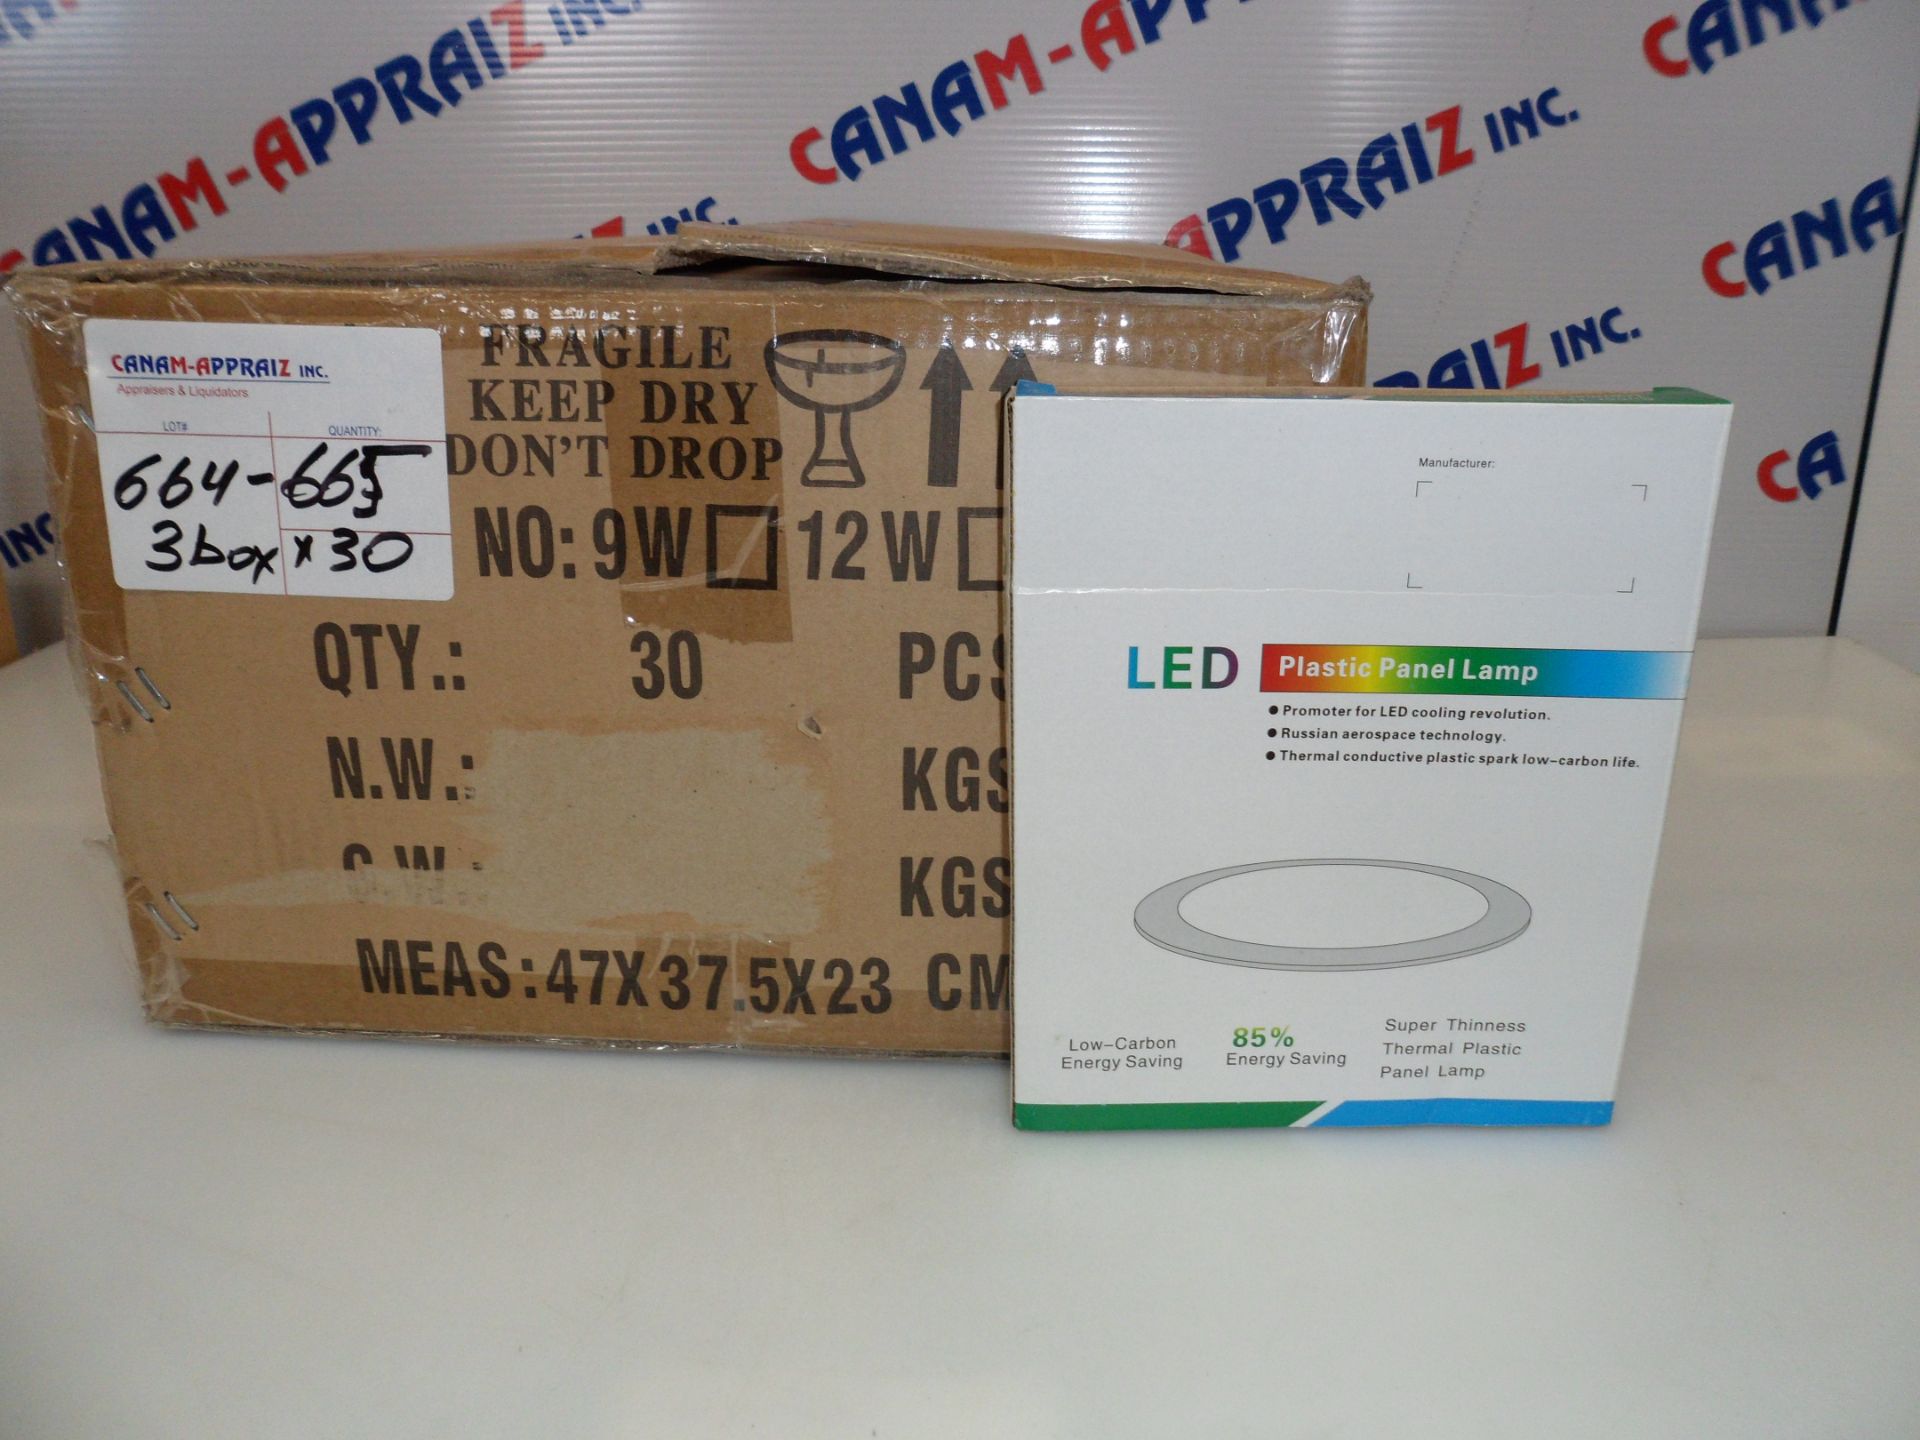 LED - LOW PROFILE PLASTIC PANEL LAMP (NO BALLAST) x 30/Box - 3BOXES - Image 2 of 2